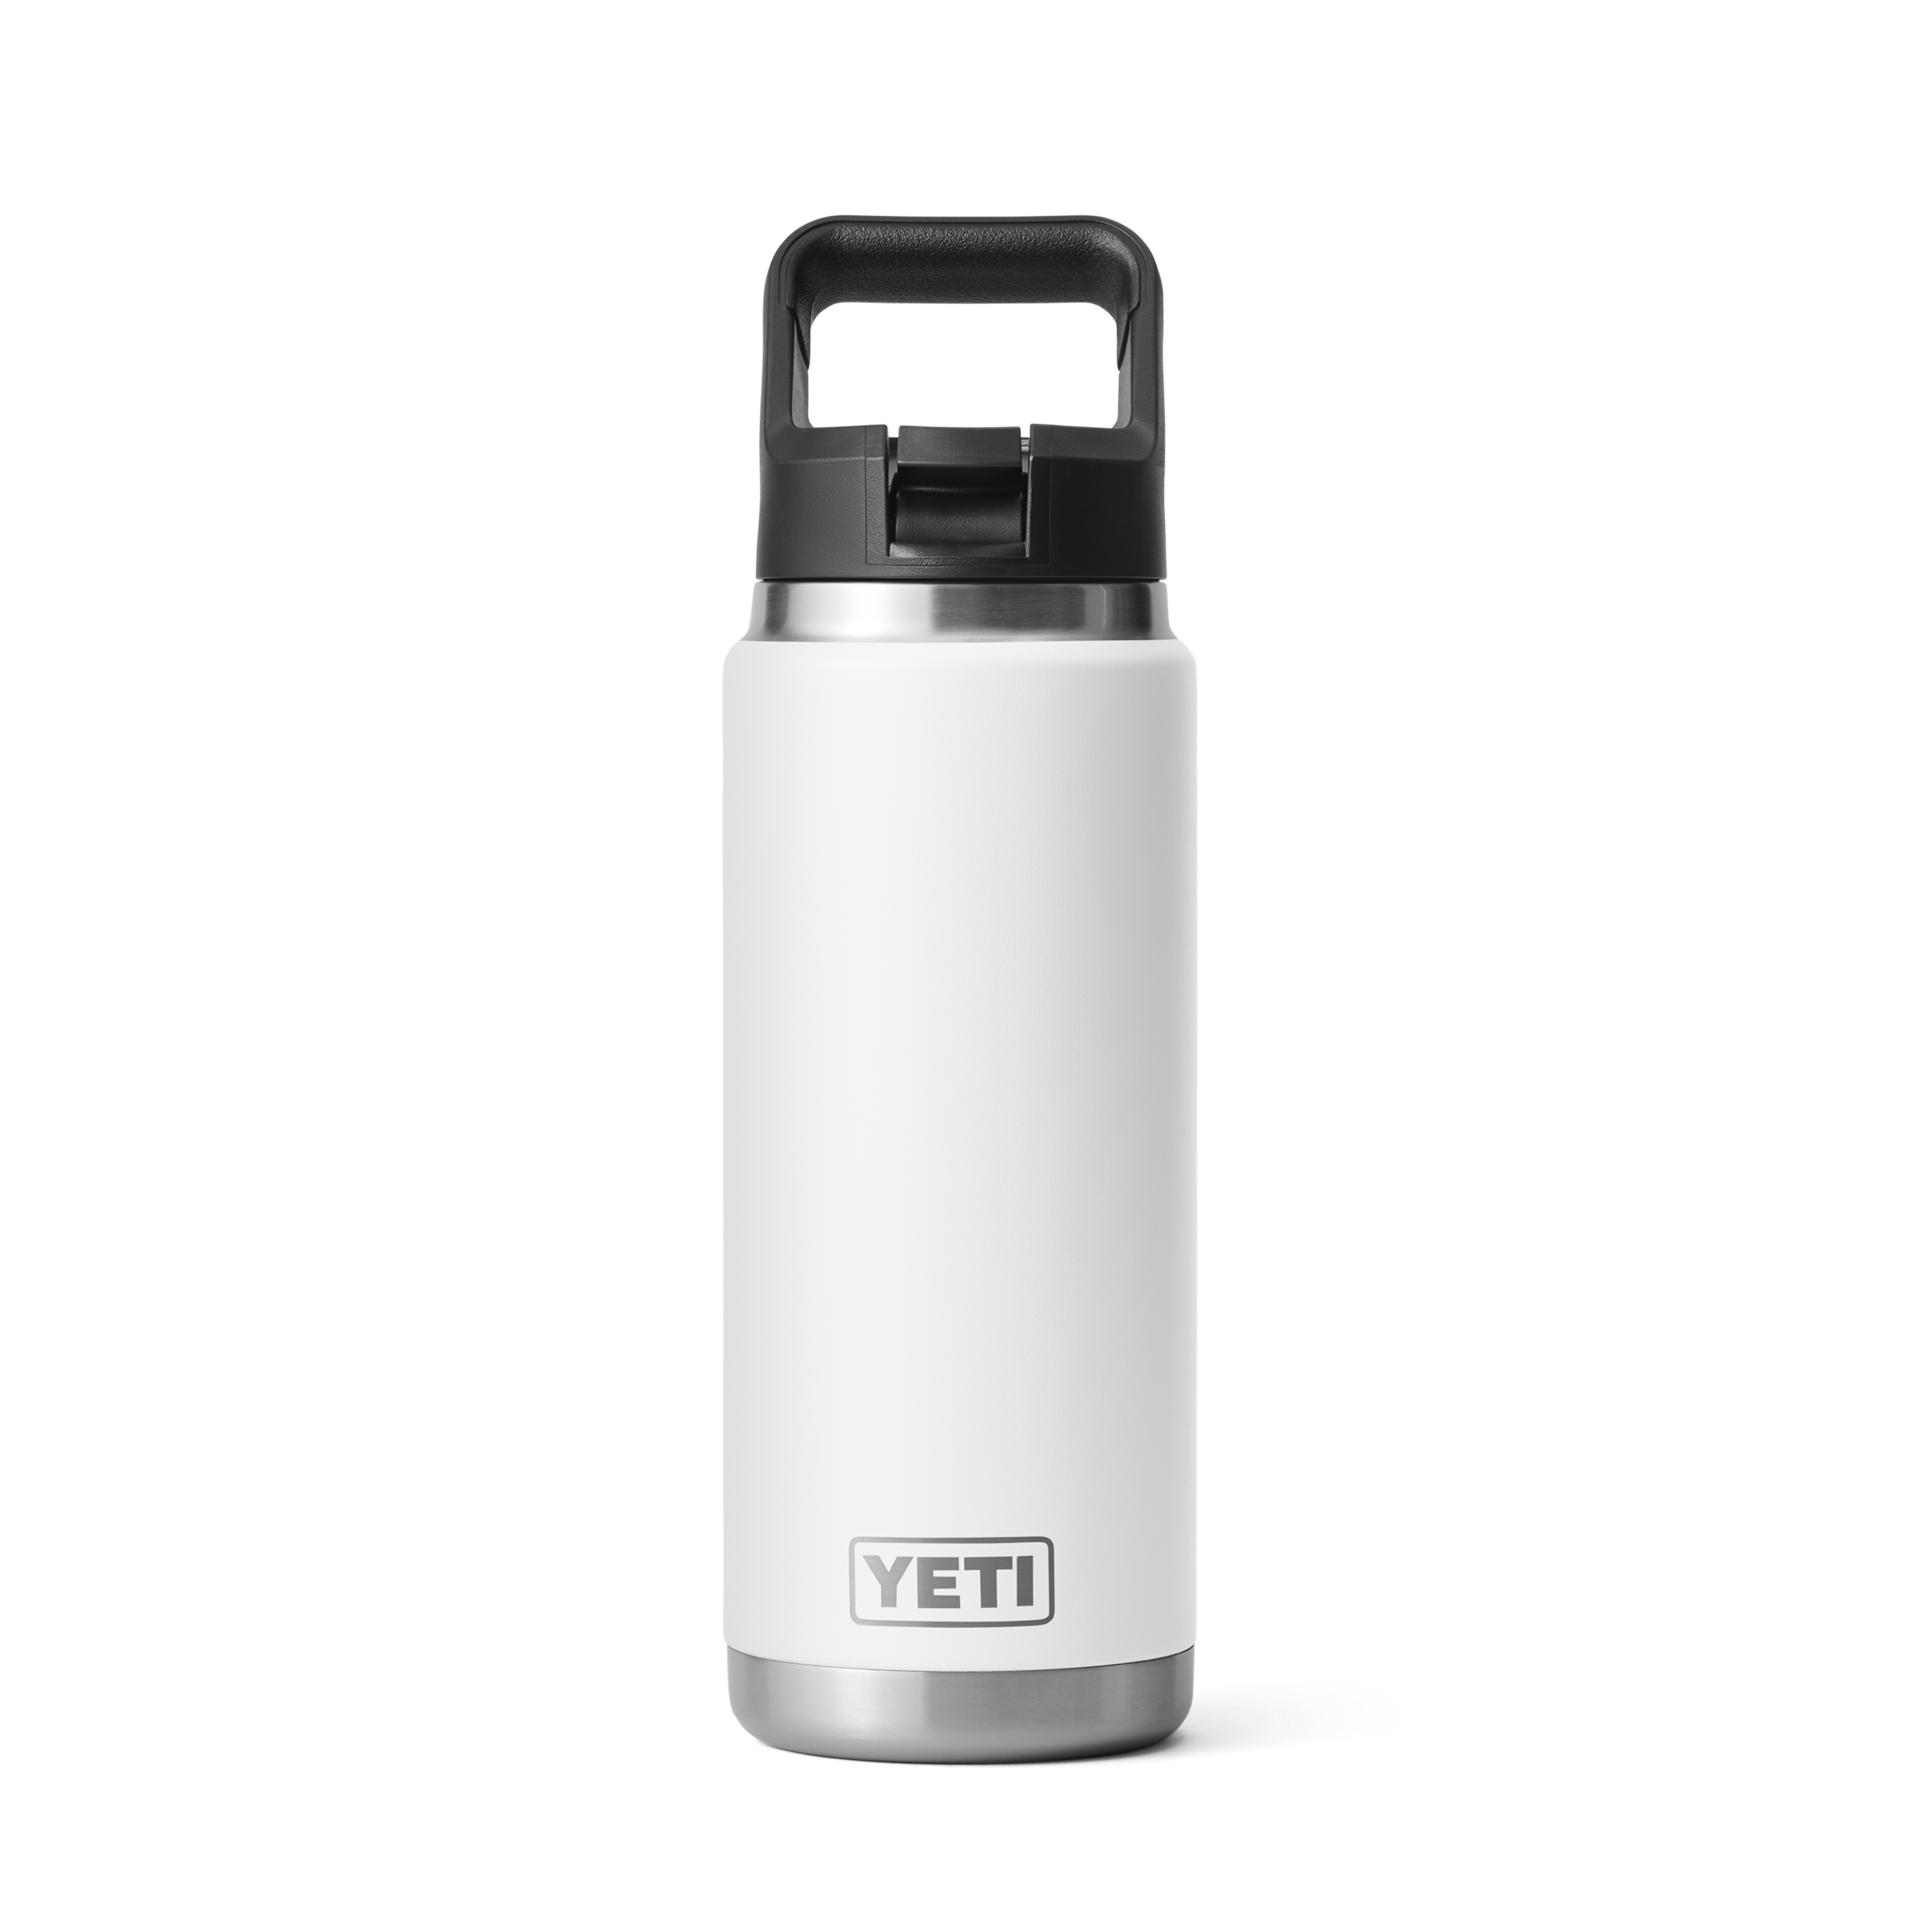 Yeti Rambler Bottle 26 oz w/Straw Cap Accessories Yeti White  